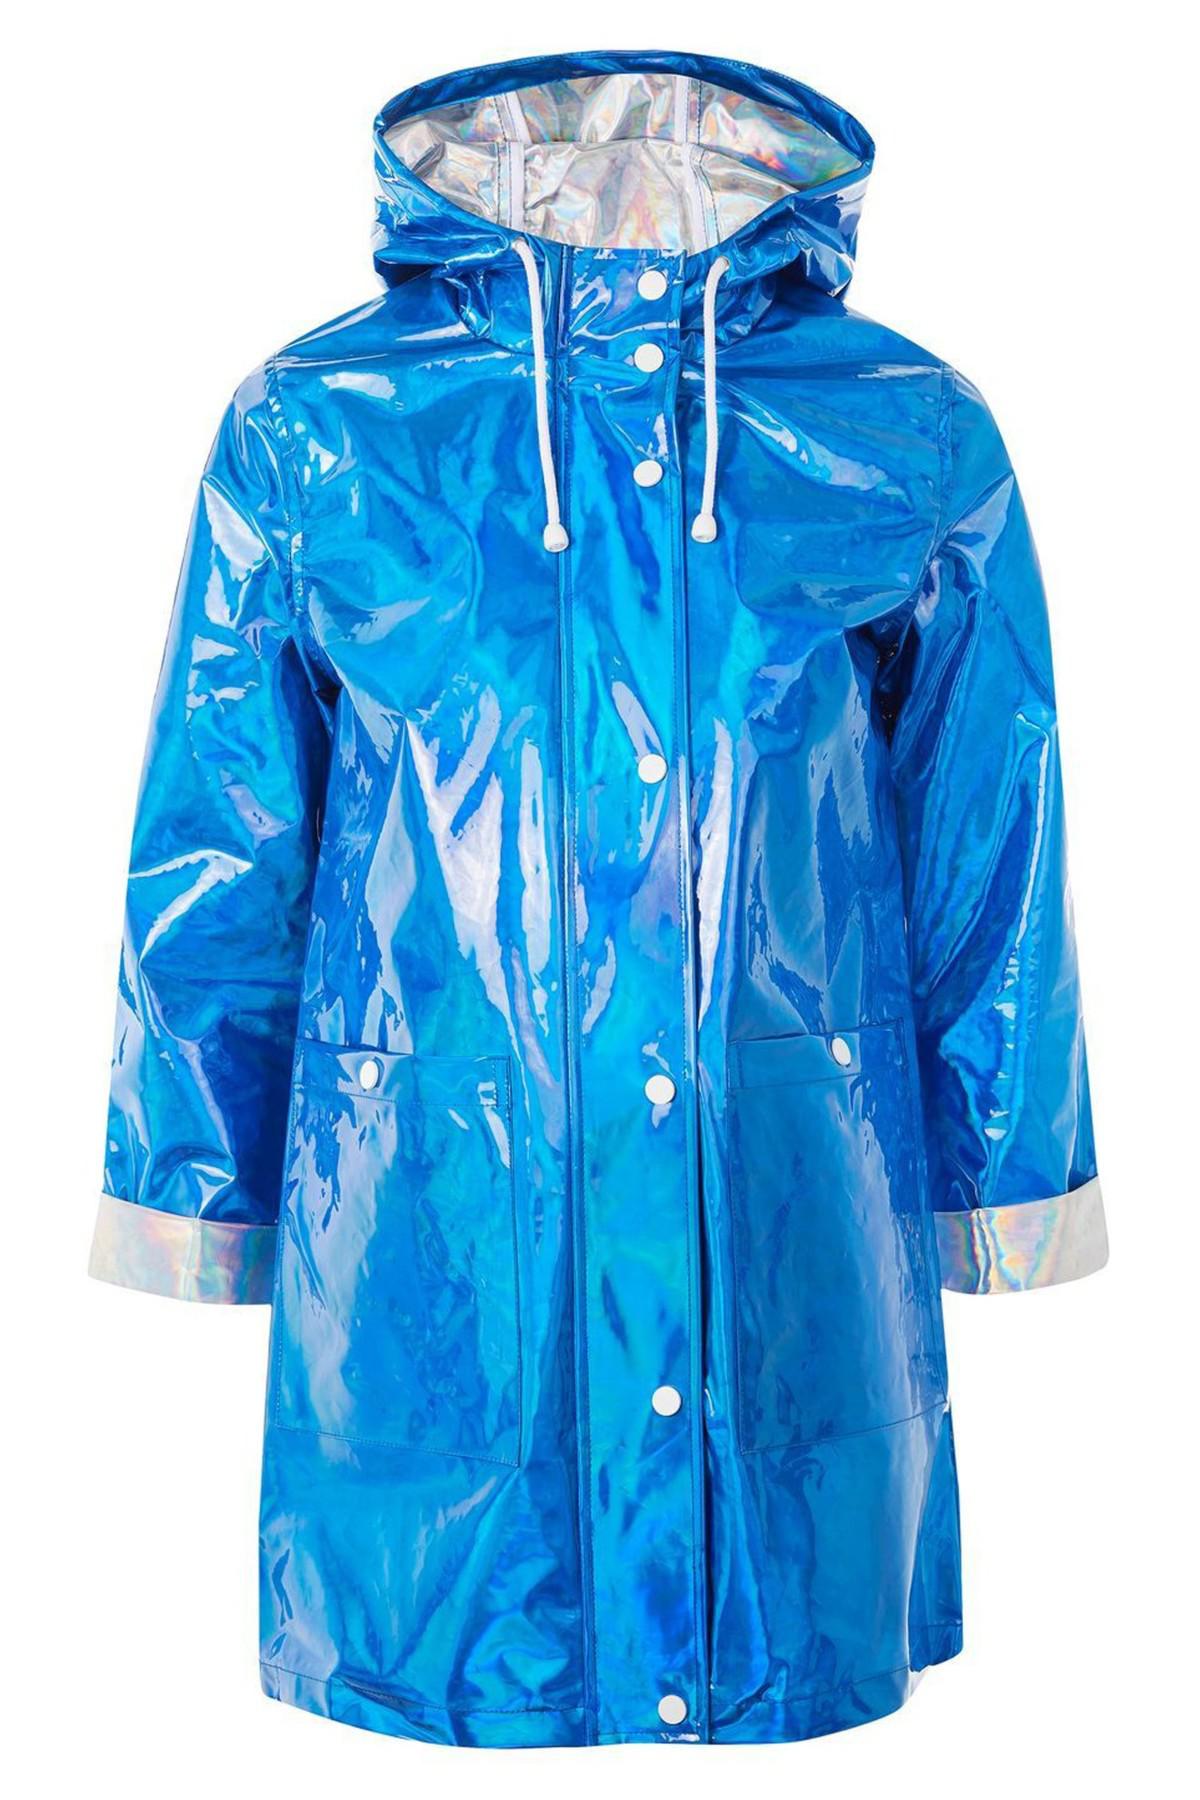 TOPSHOP Iridescent Rain Jacket in Blue - Lyst